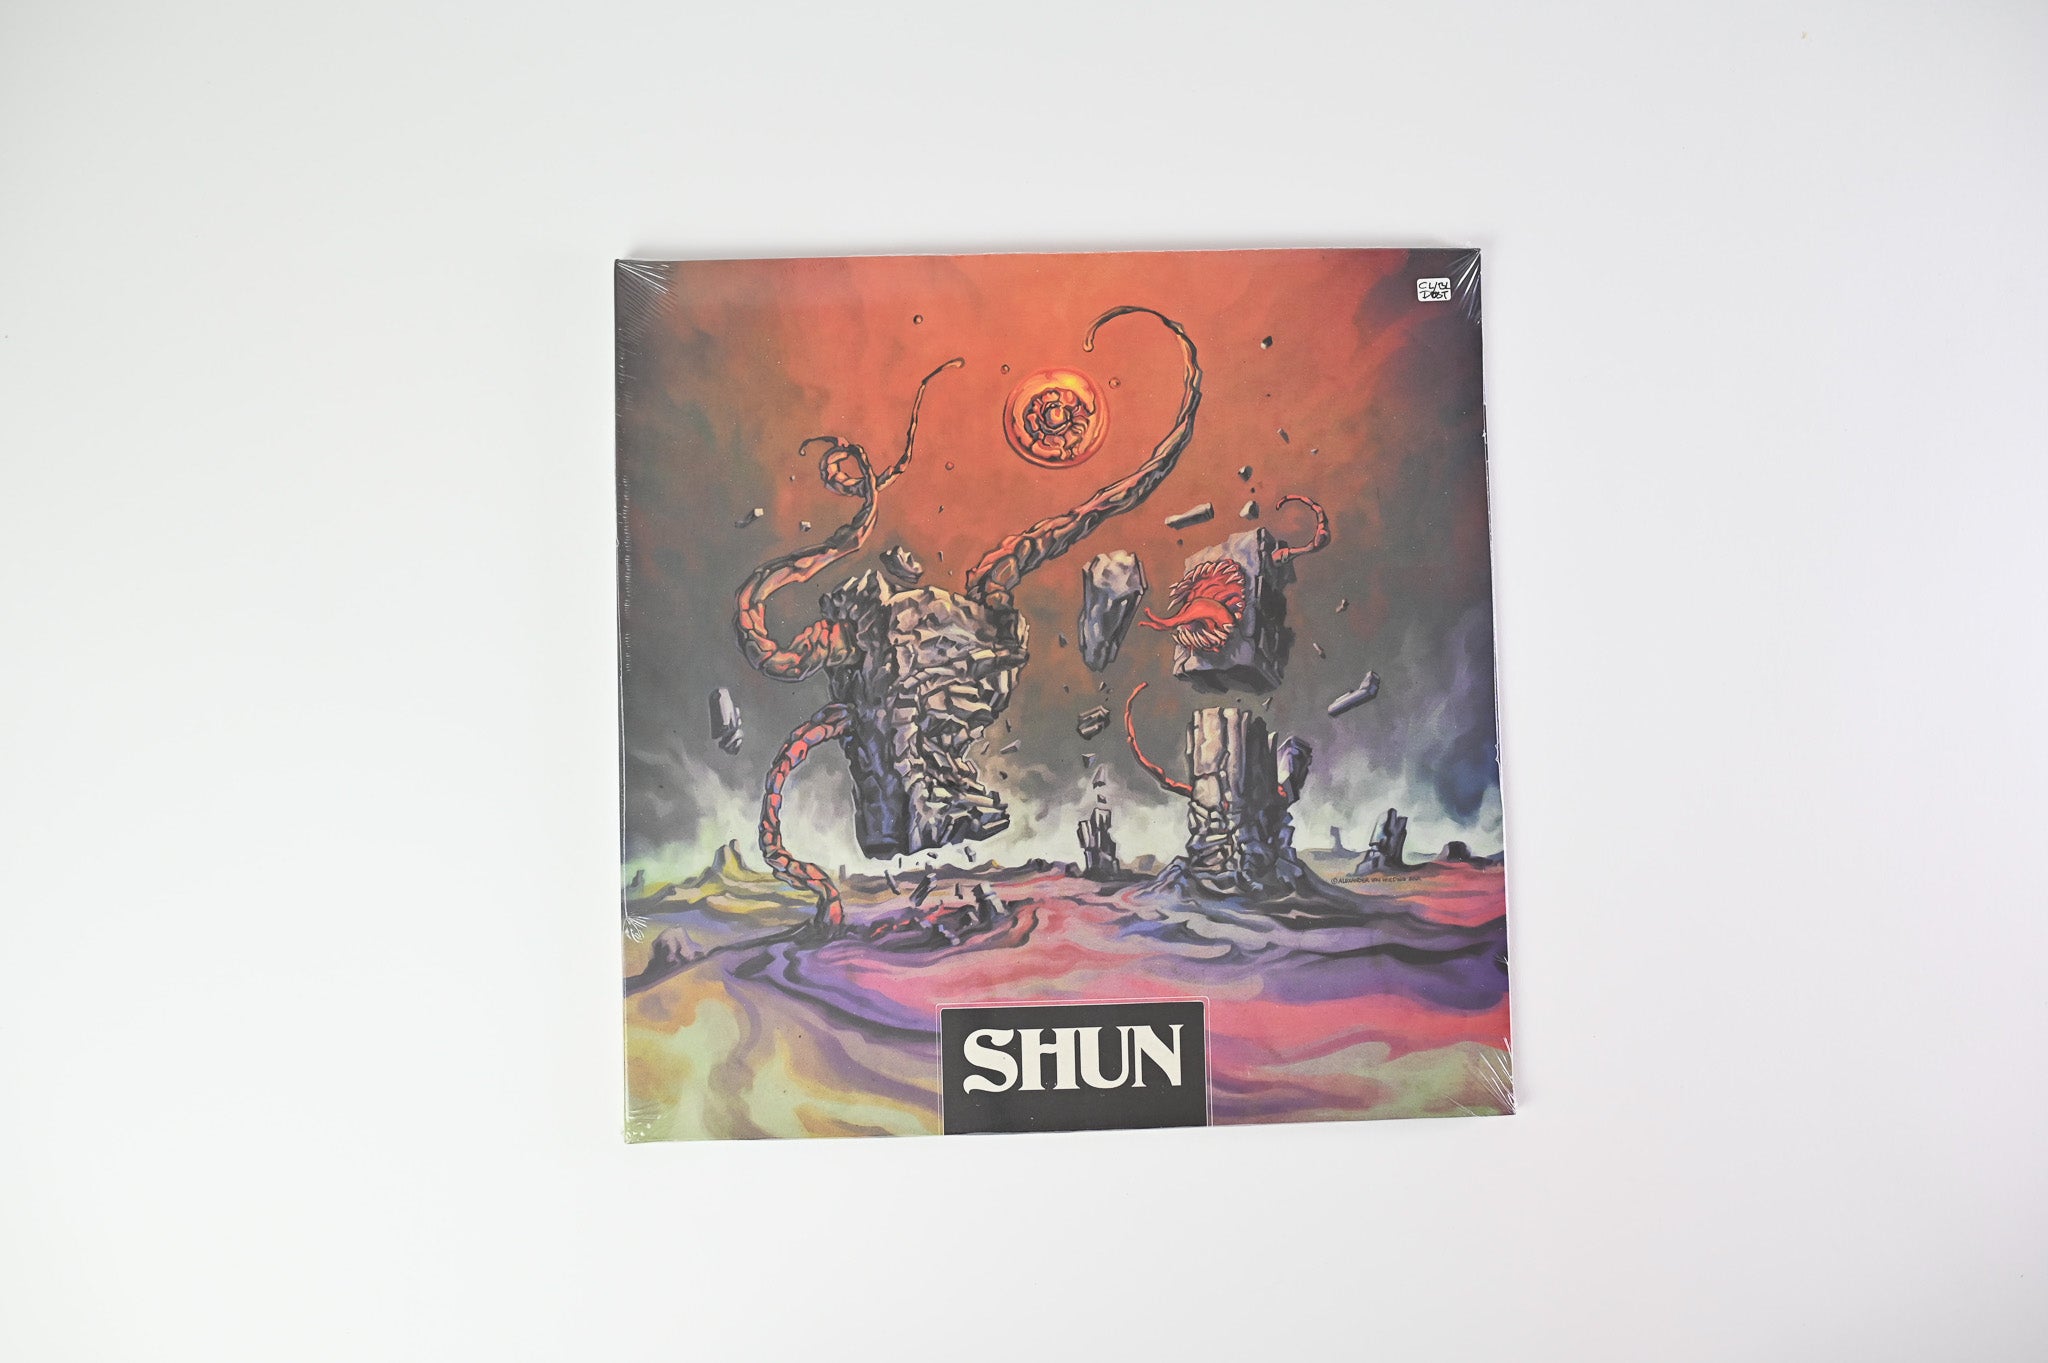 Shun - Shun on Kozmik Artifactz/Small Stone Records SEALED on Clear/Black Dust Vinyl